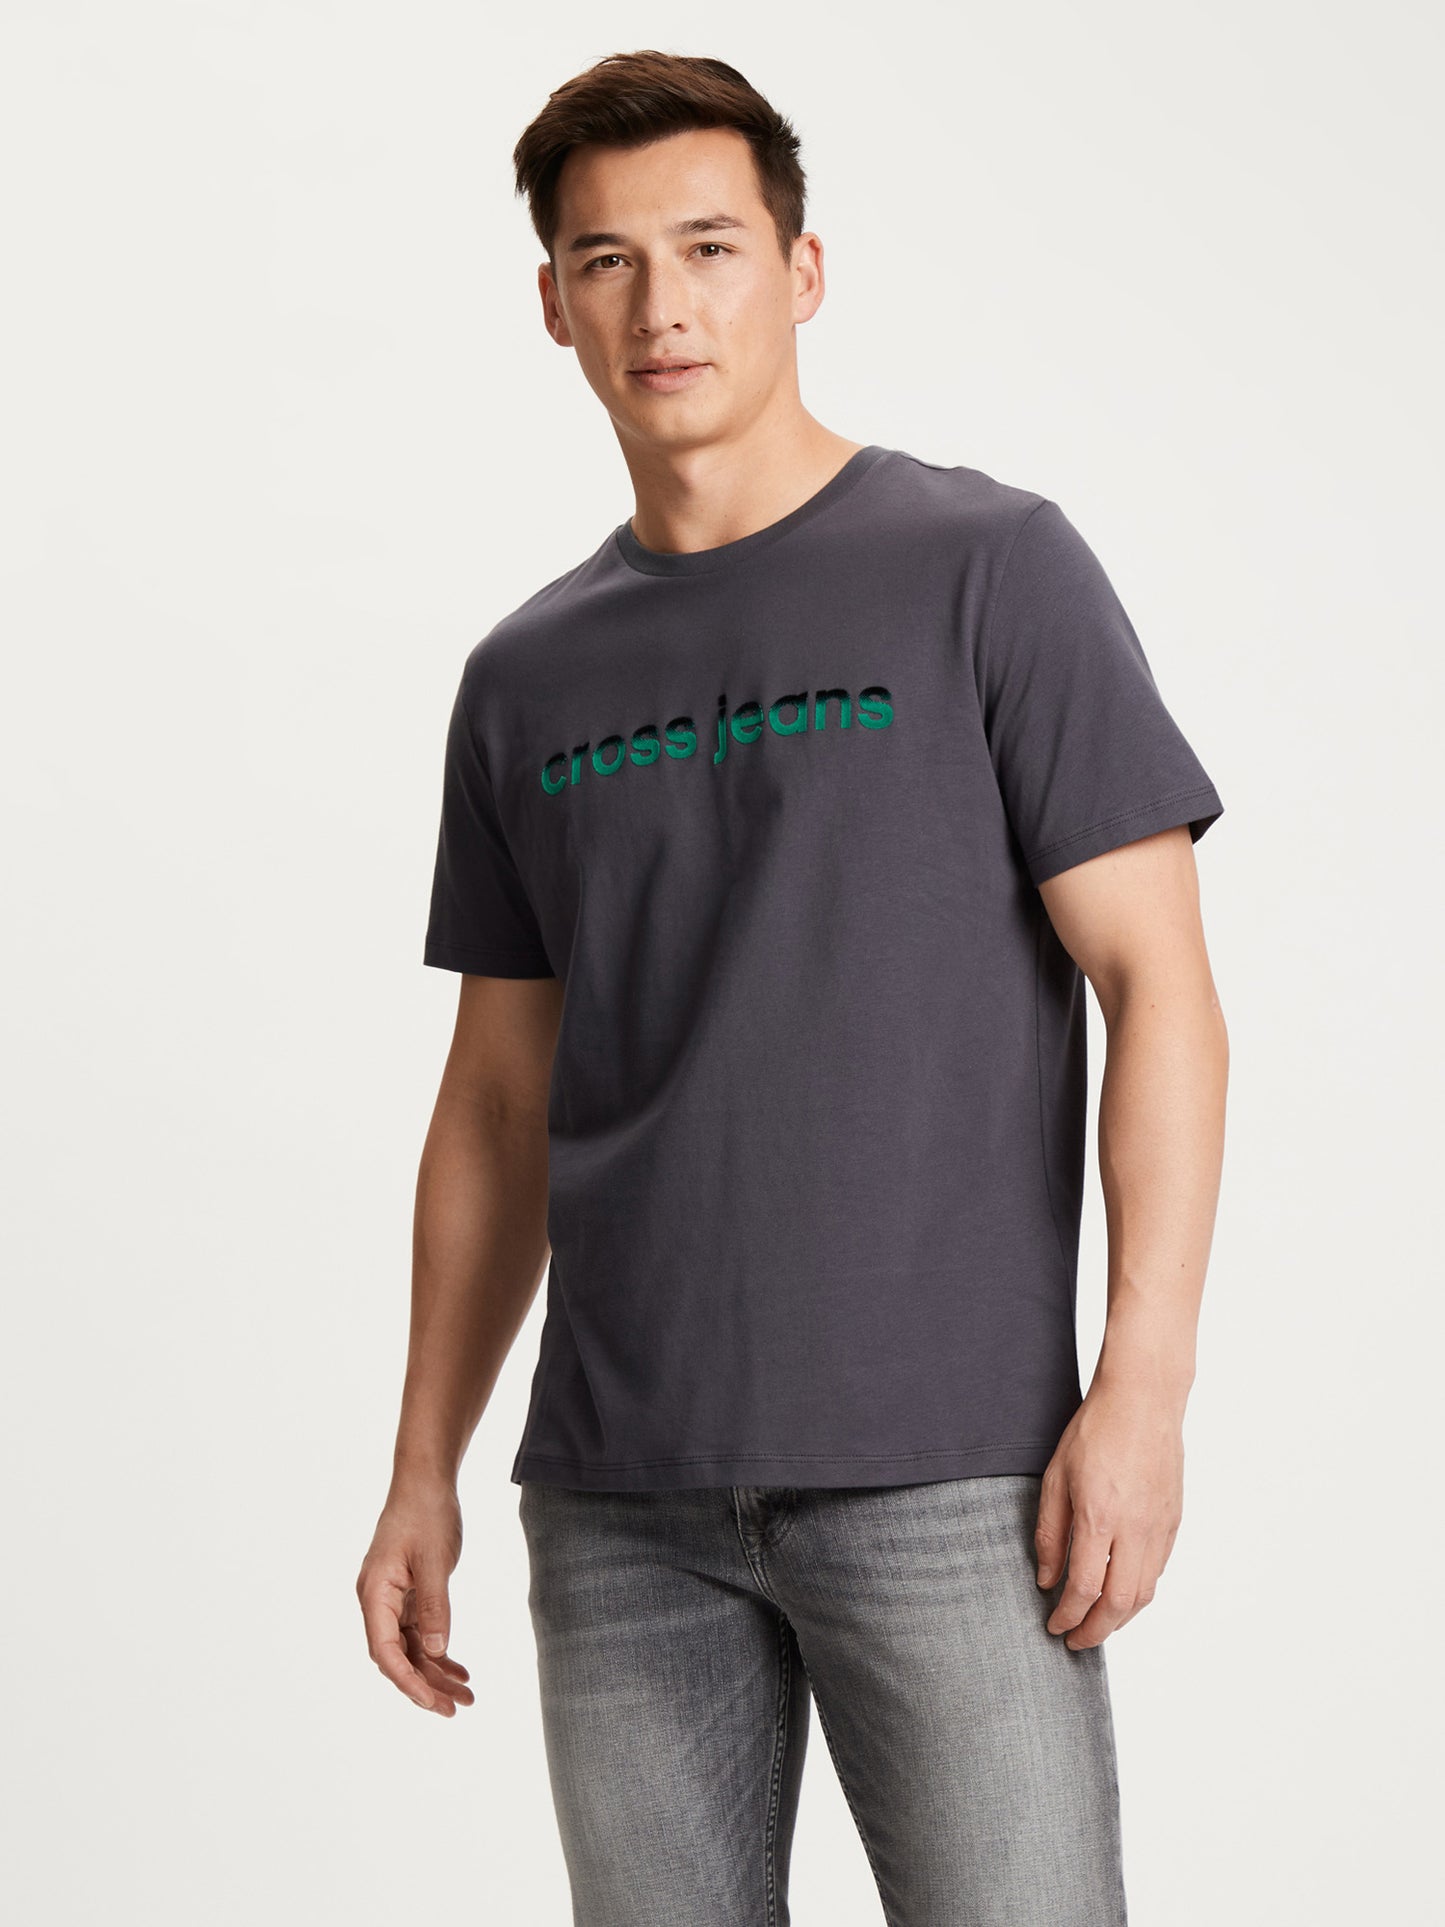 Men's regular T-shirt with label print, anthracite.